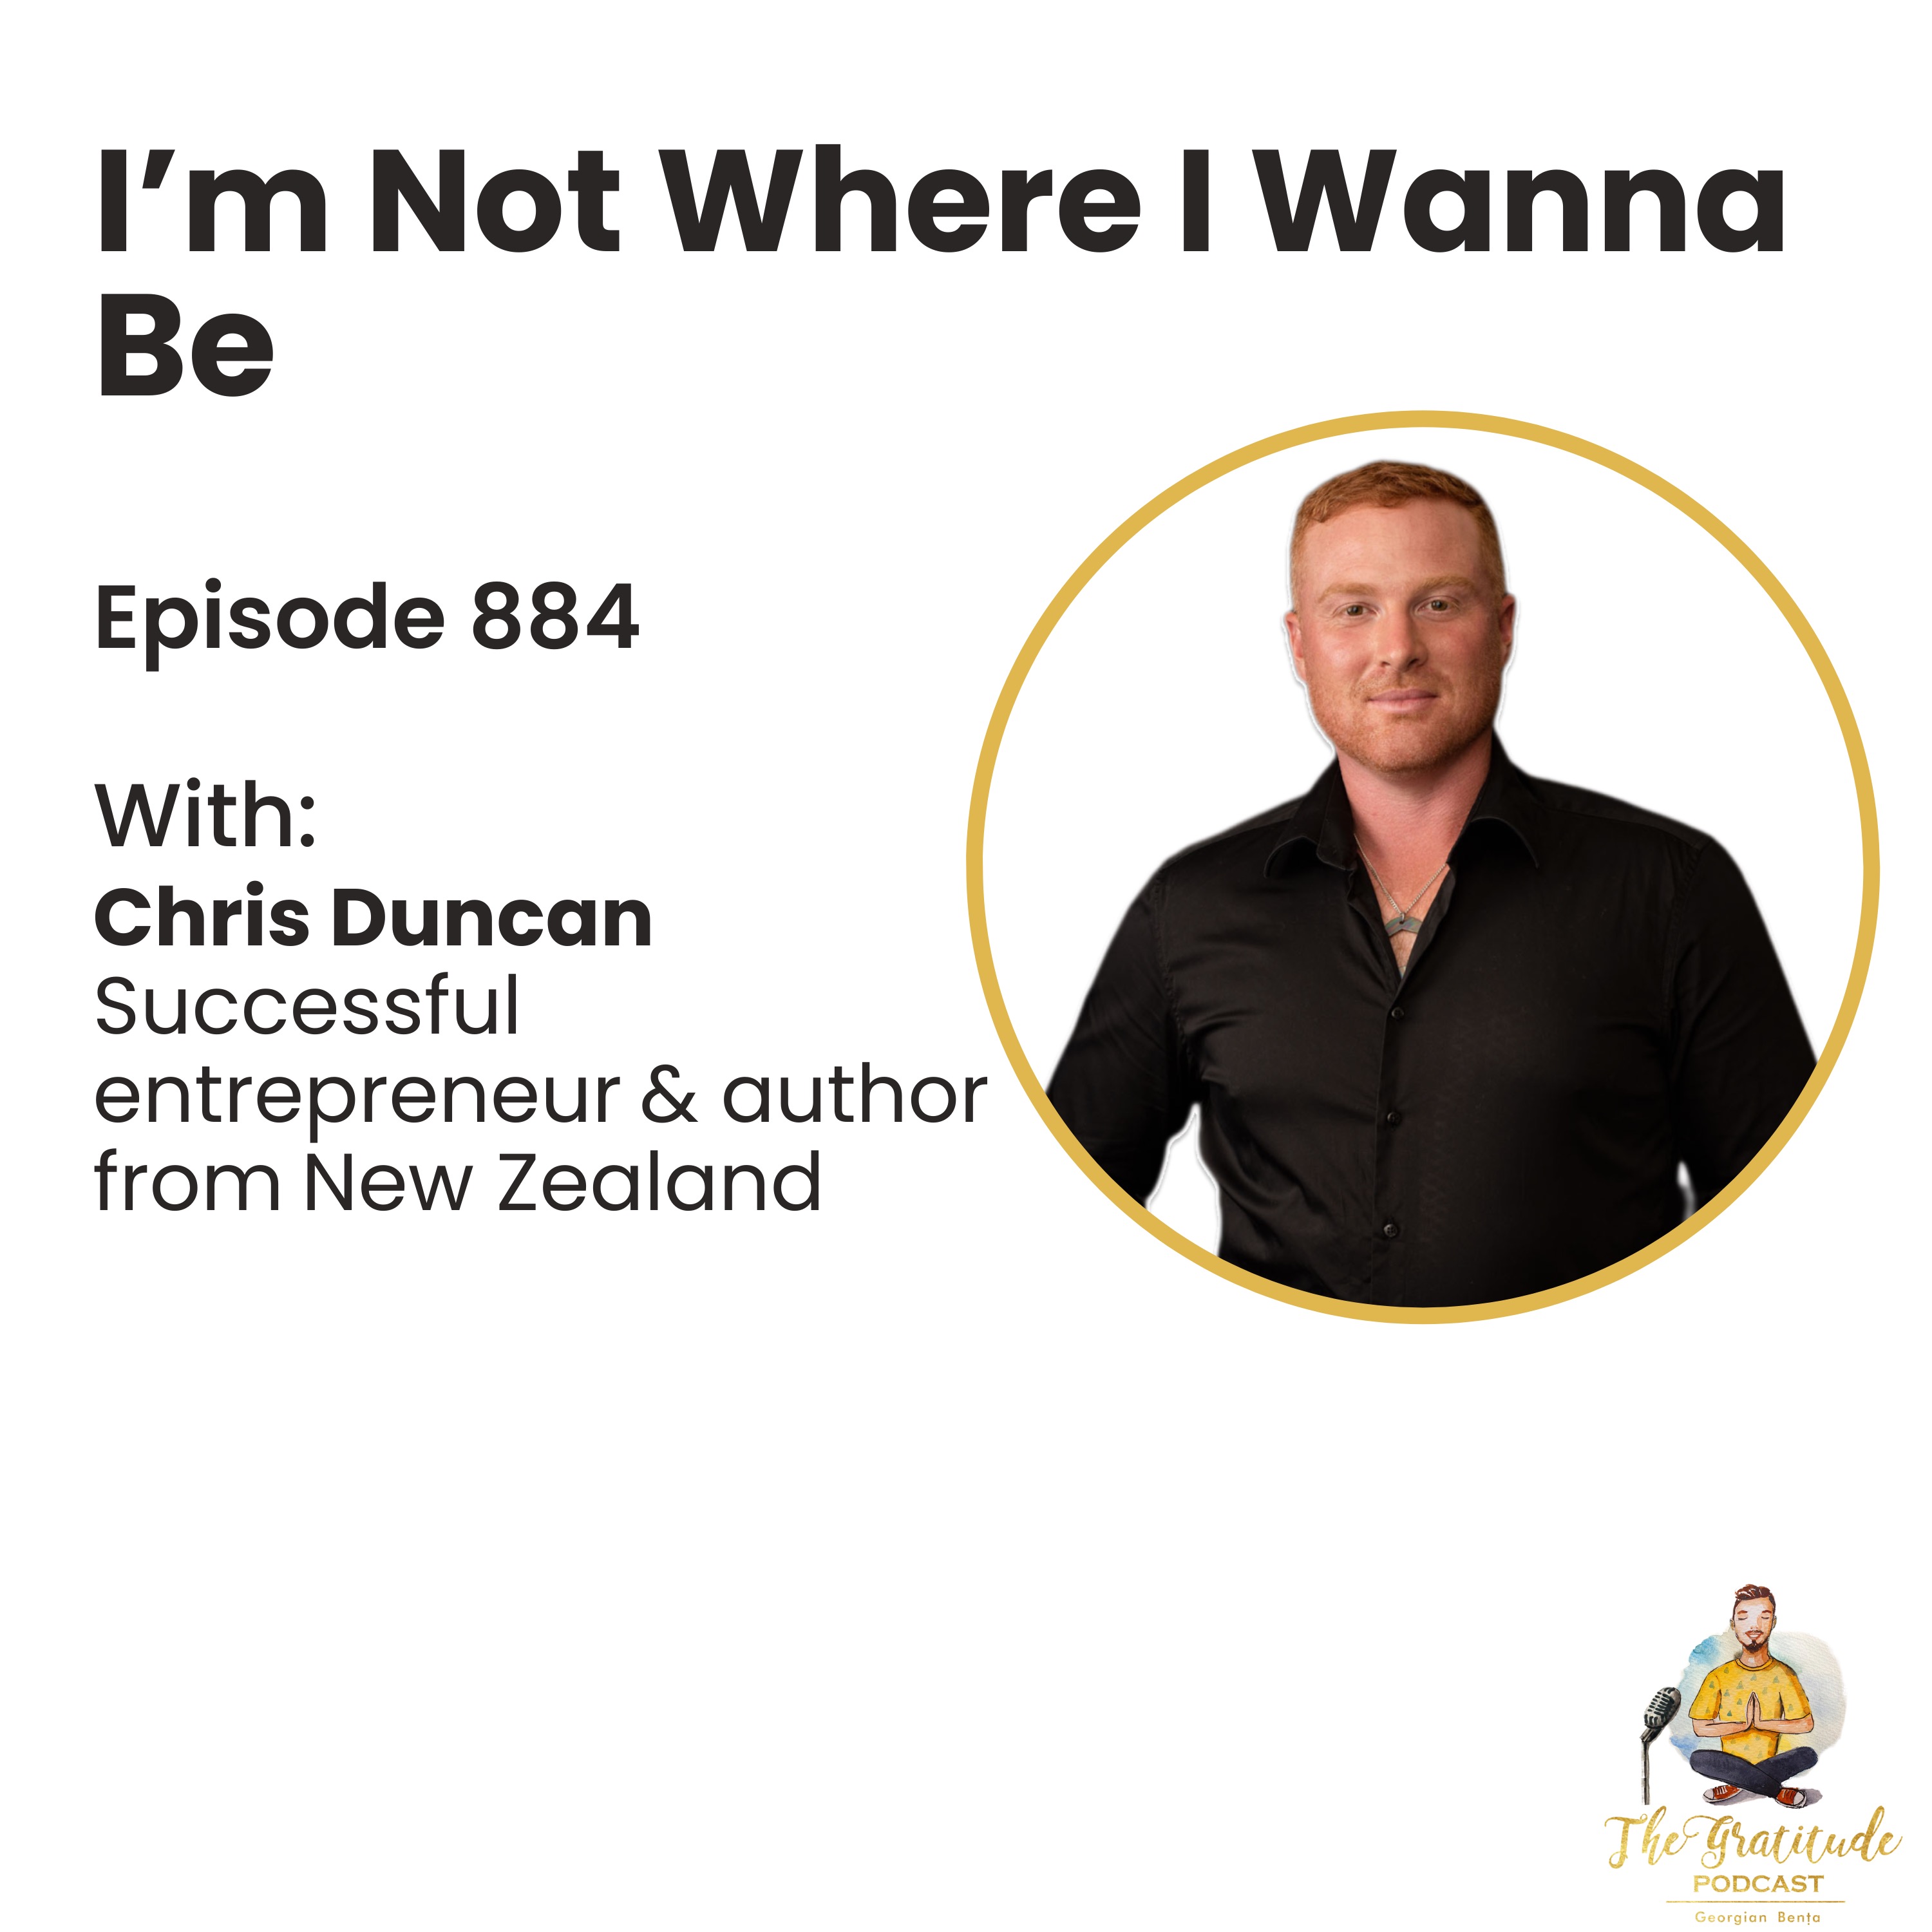 I’m Not Where I Wanna Be - Chris Duncan (ep. 884)